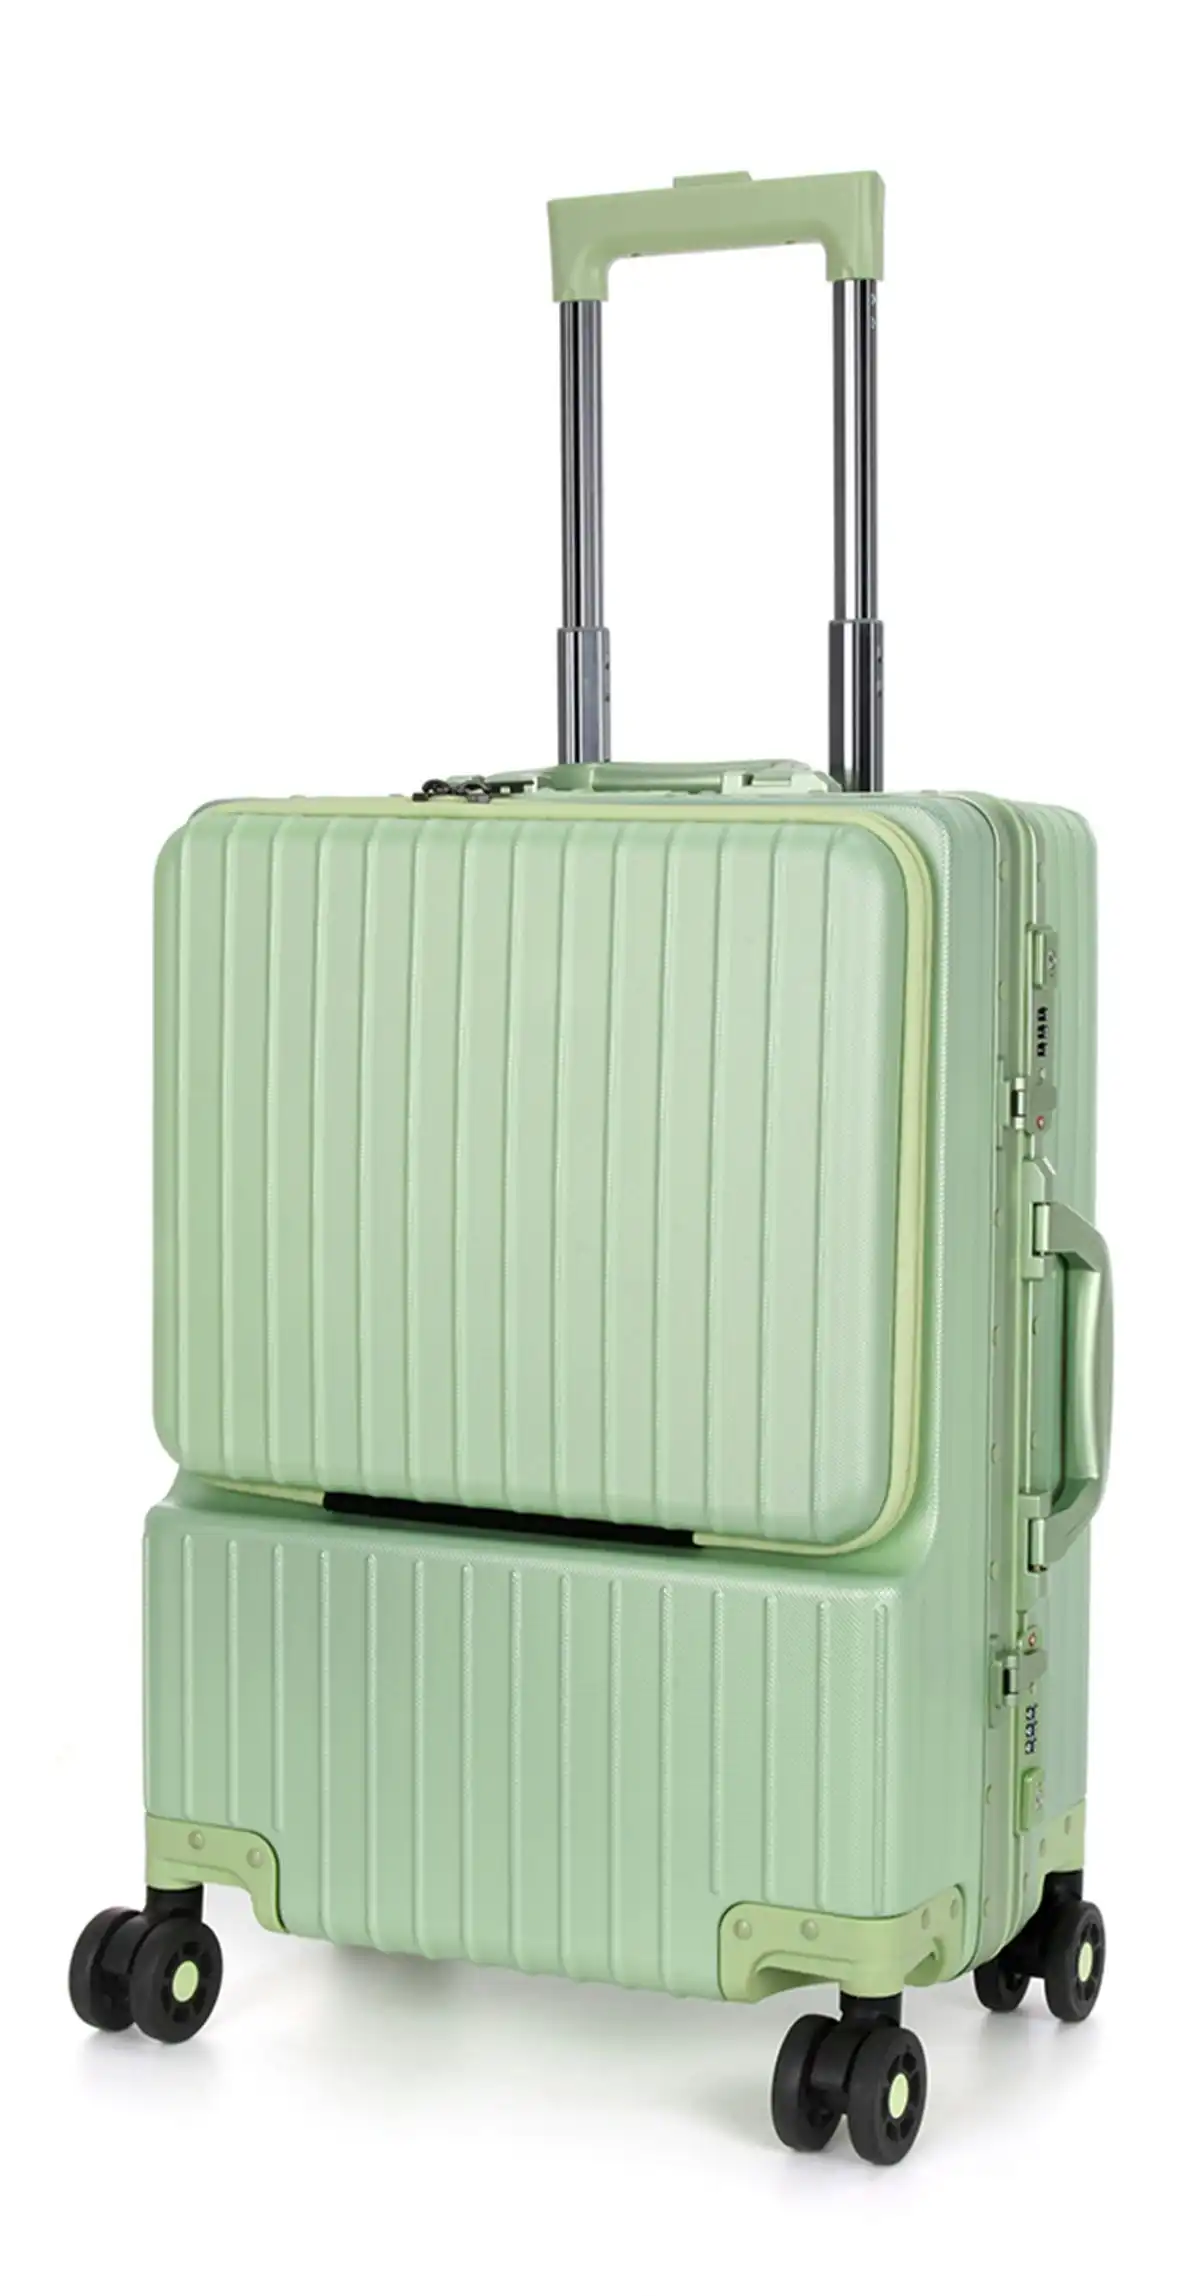 Suissewin Swiss Aluminium Luggage Suitcase Lightweight TSA locker 8 wheels Carry On HardCase SN8610A Green